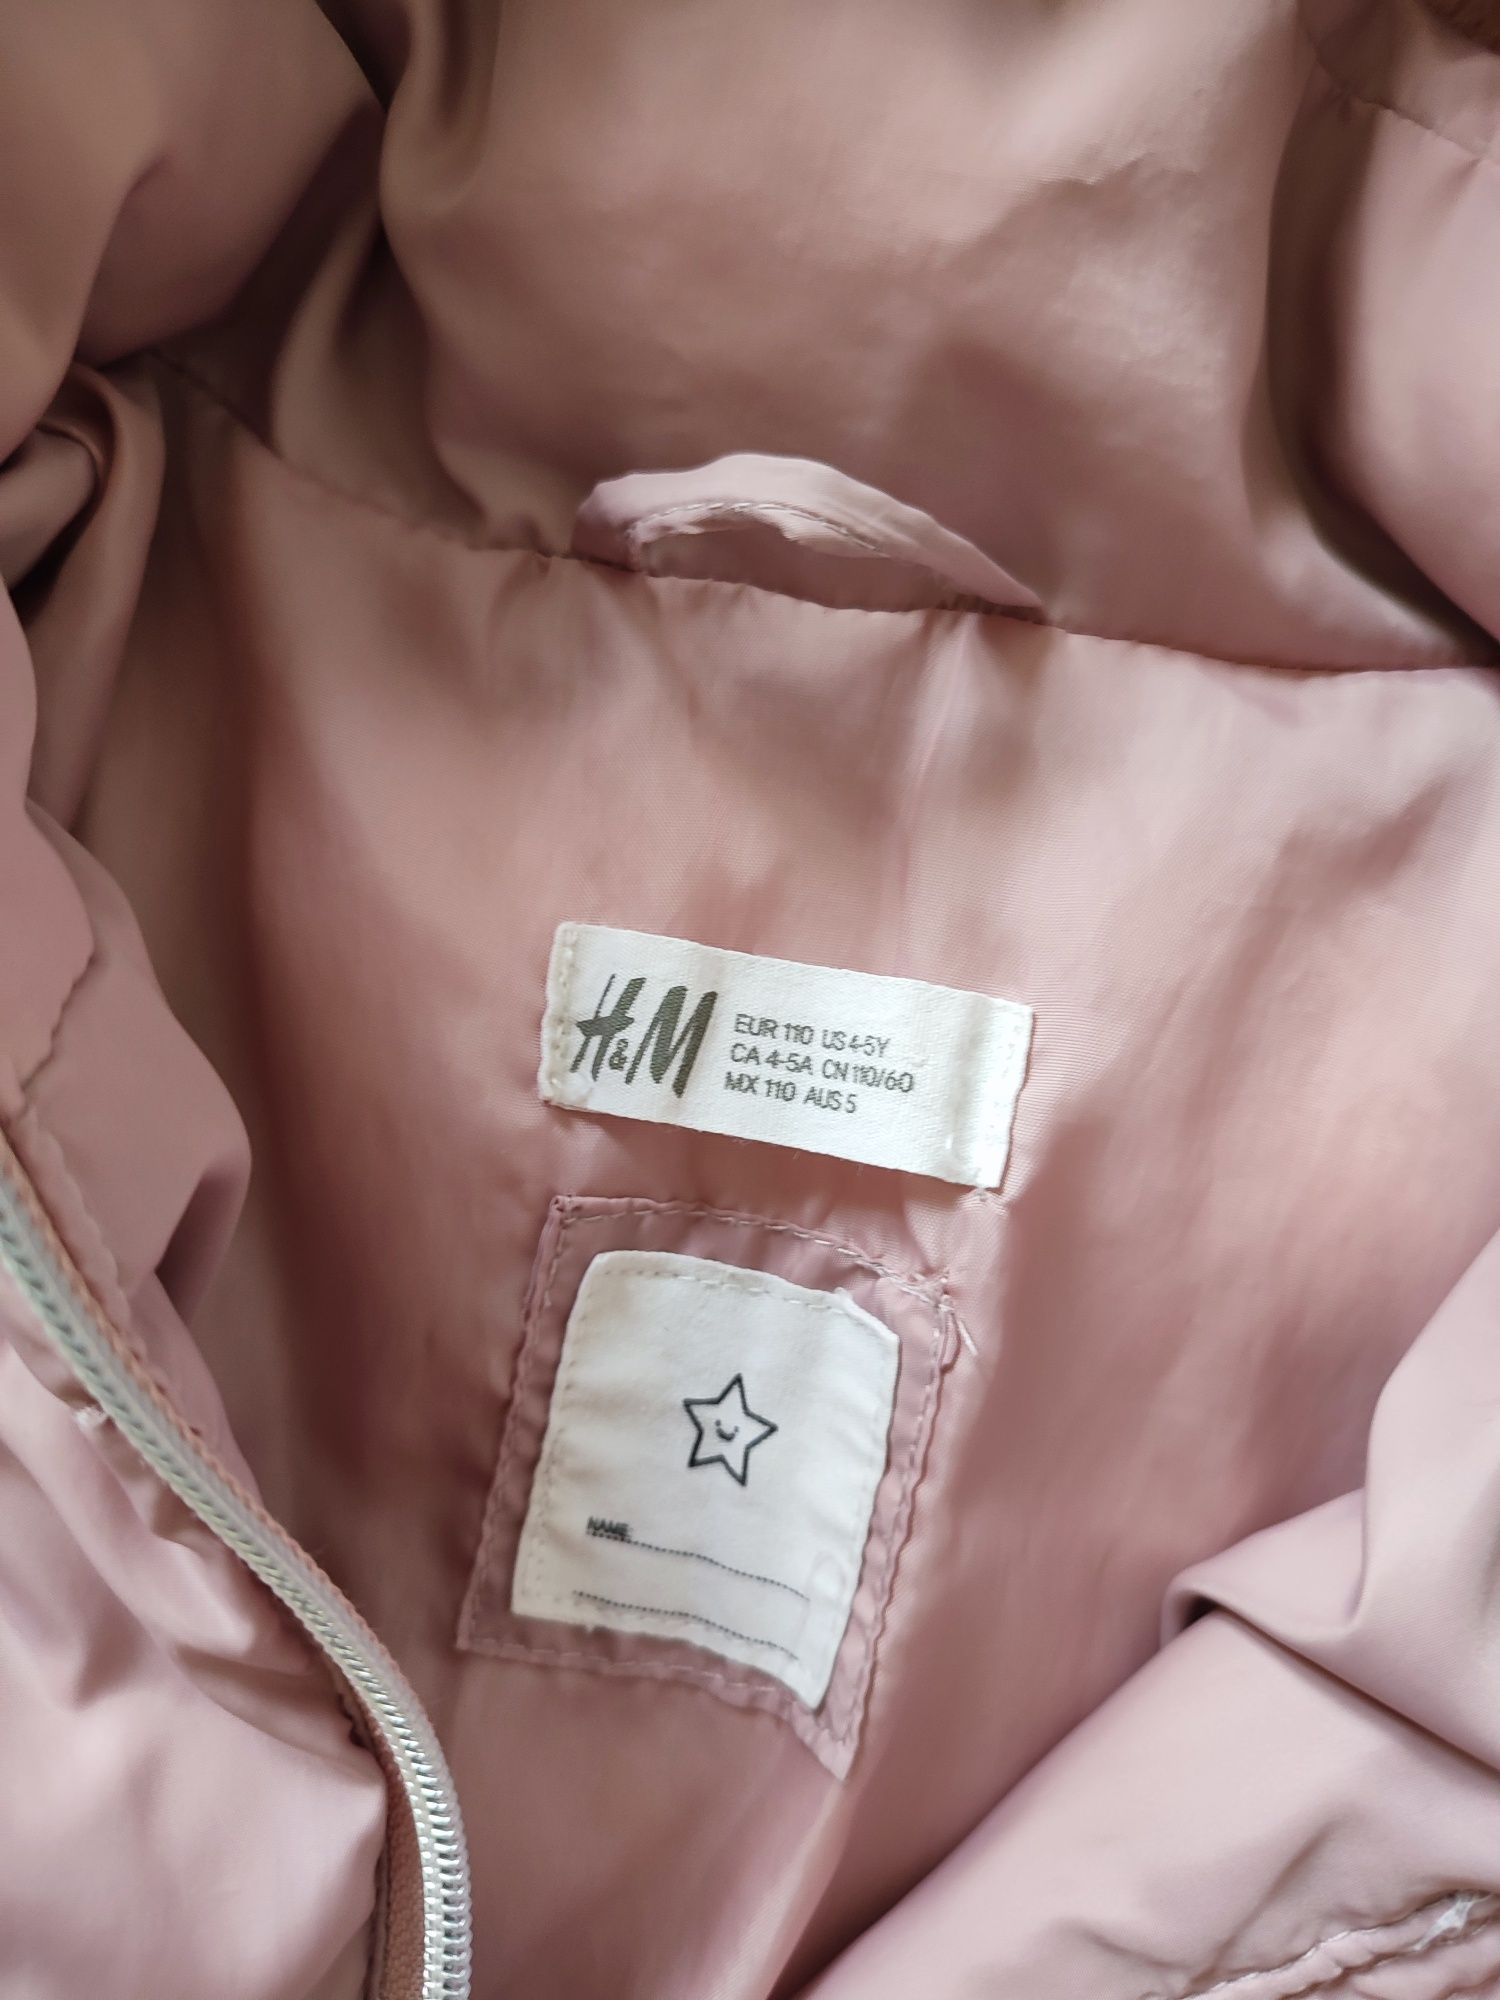 110 H&M kurtka puffer zimowa różowa